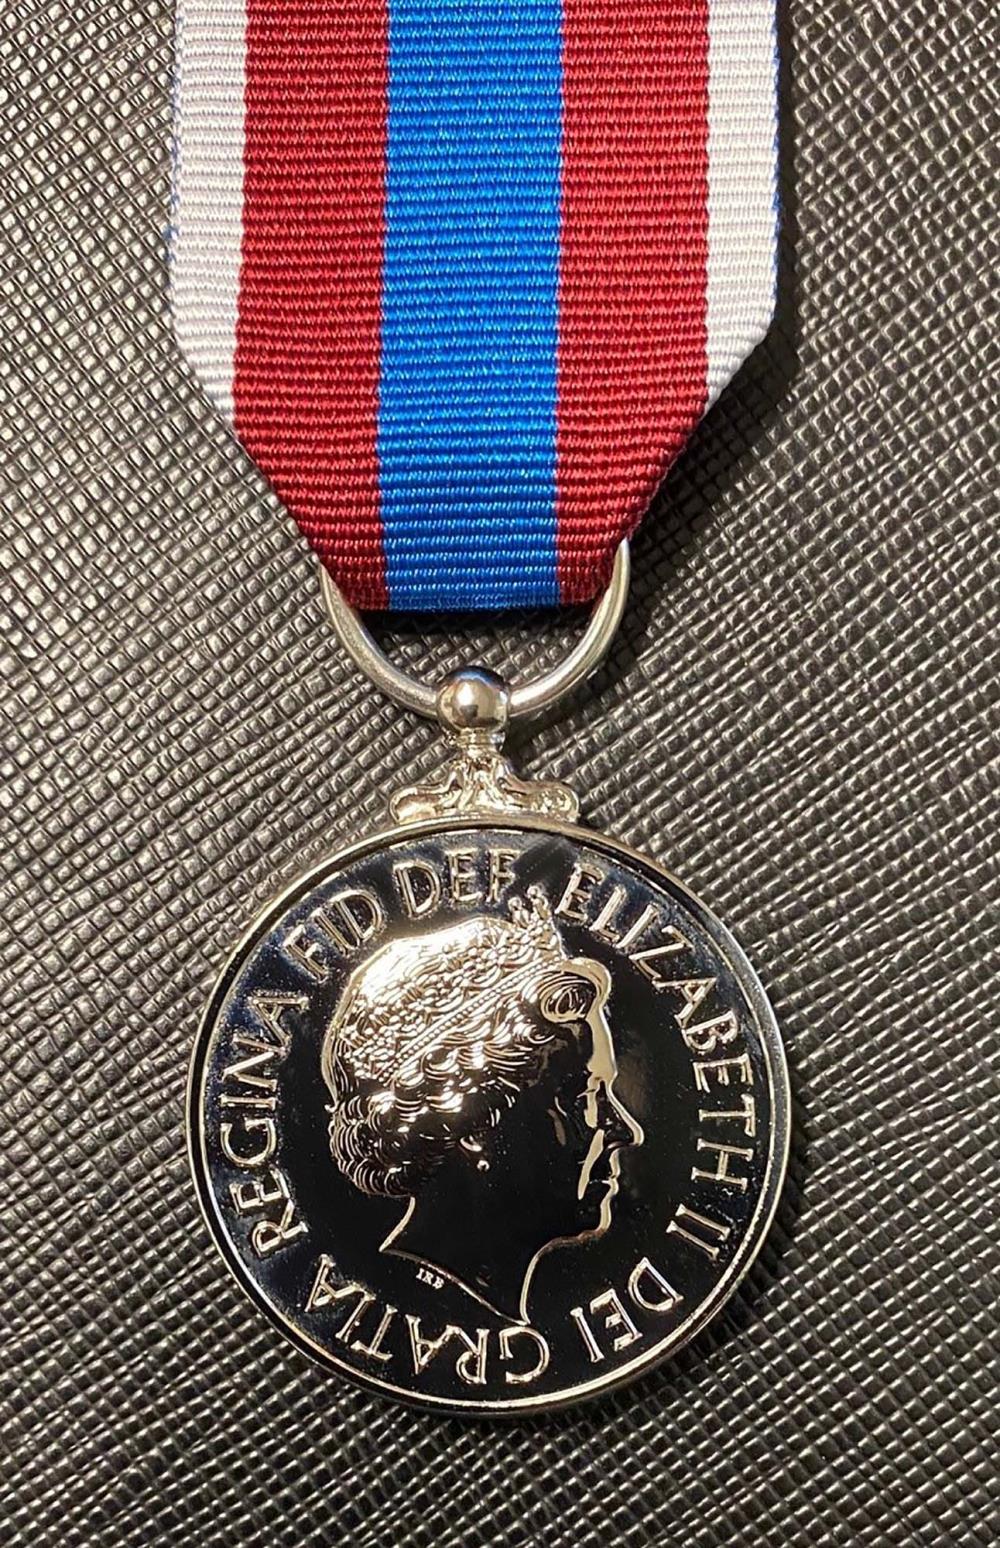 Engraving Ribbon x 10 Queen's Platinum Jubilee 2022 Medal 